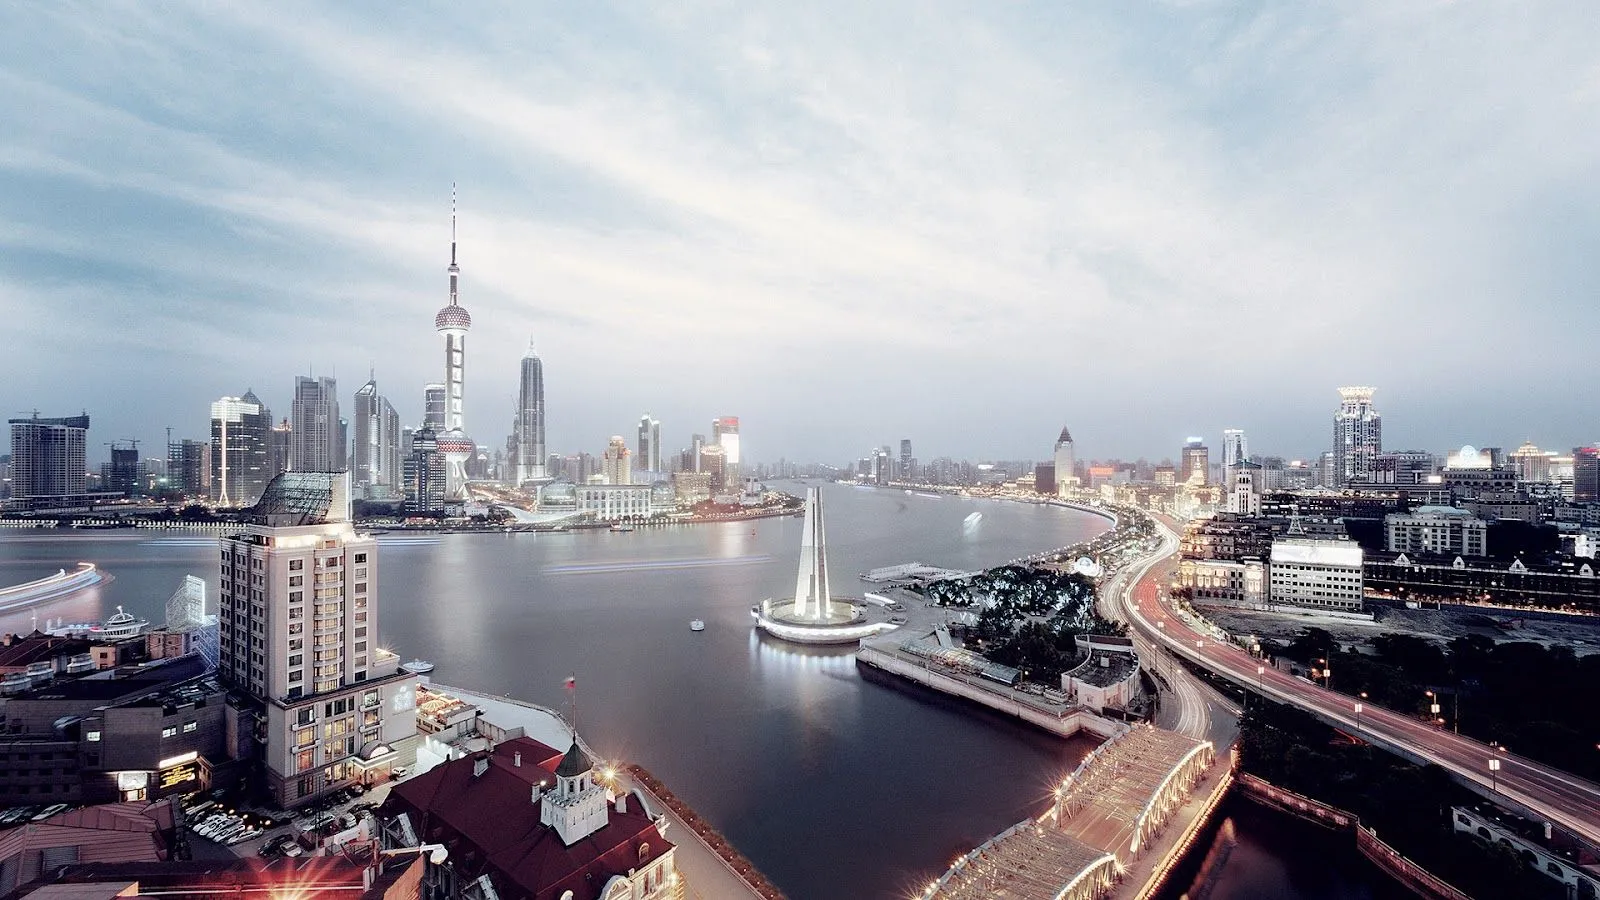 Shanghái, China - Paisajes de Ciudades | Fotos e Imágenes en ...